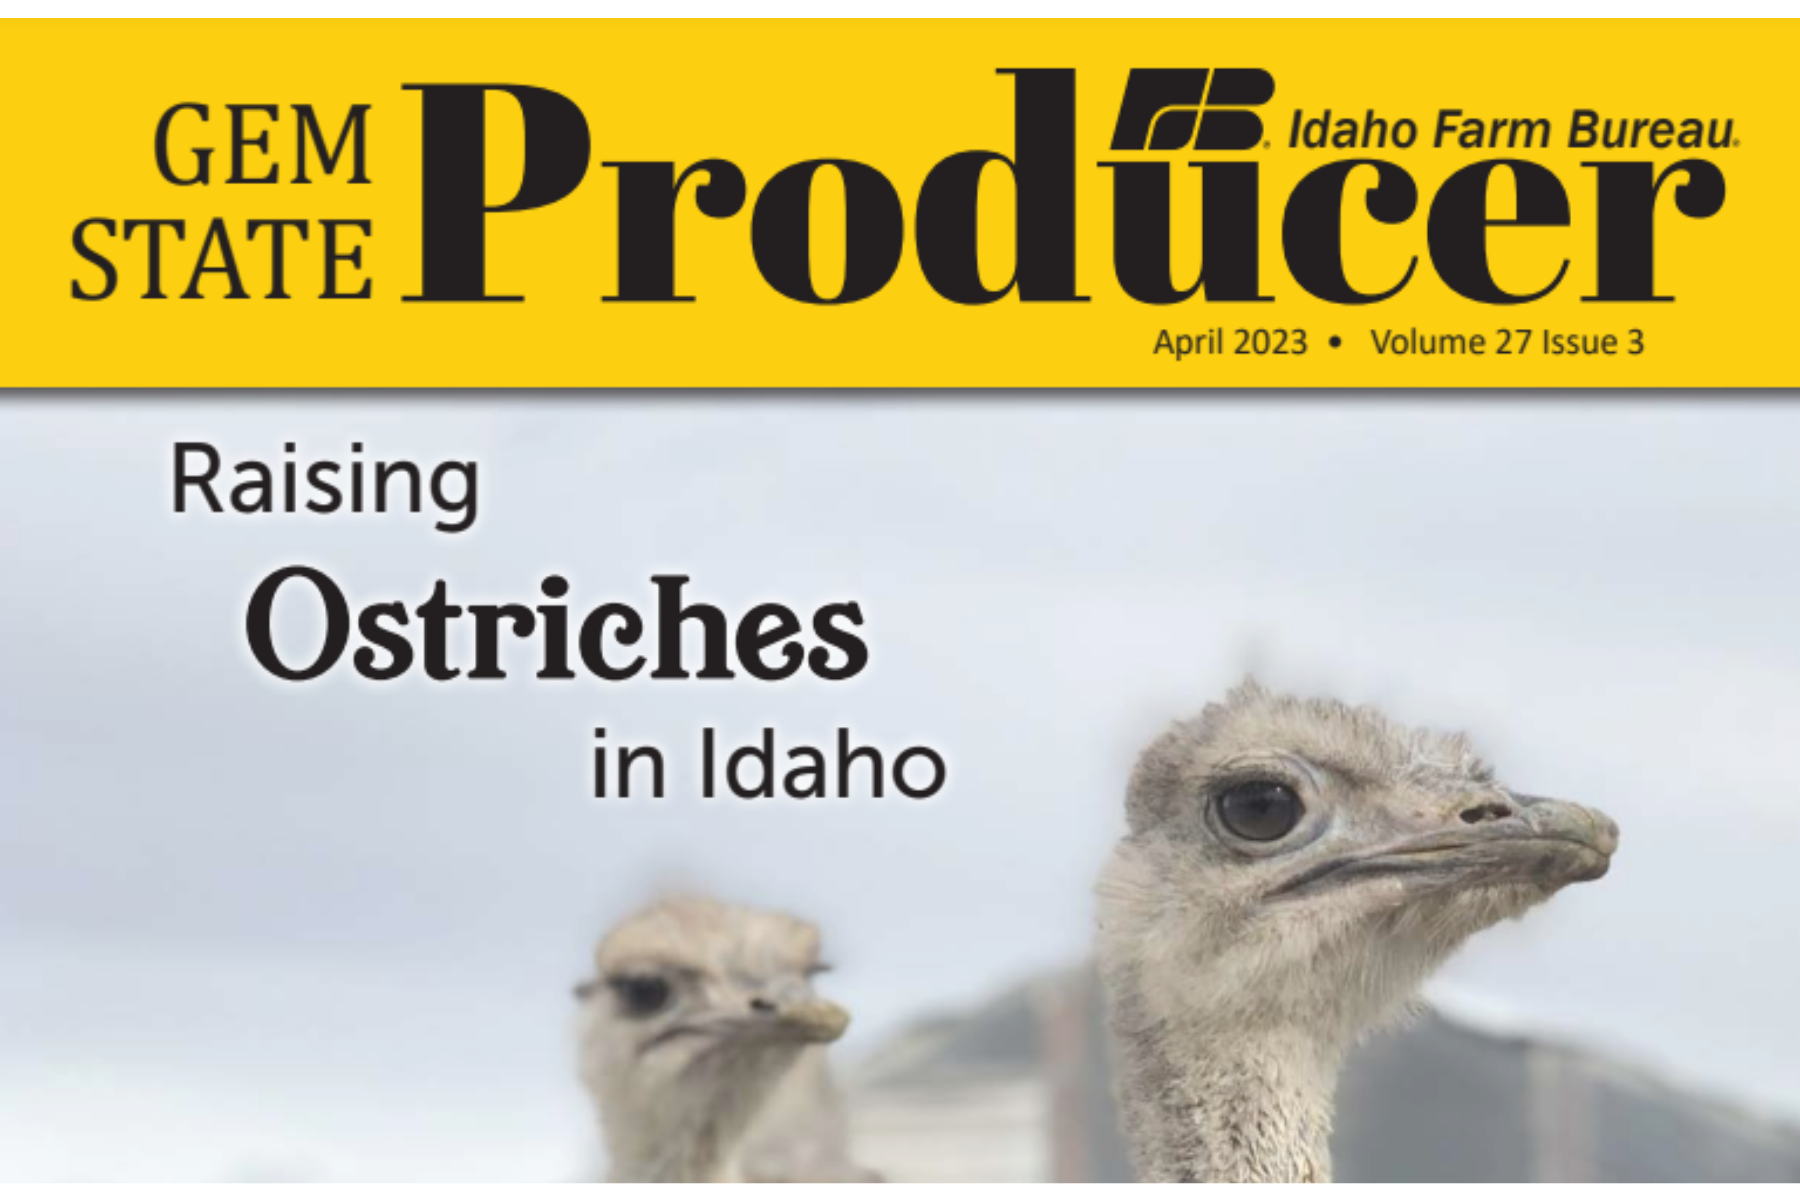 Idaho Farm Bureau interviews AOF